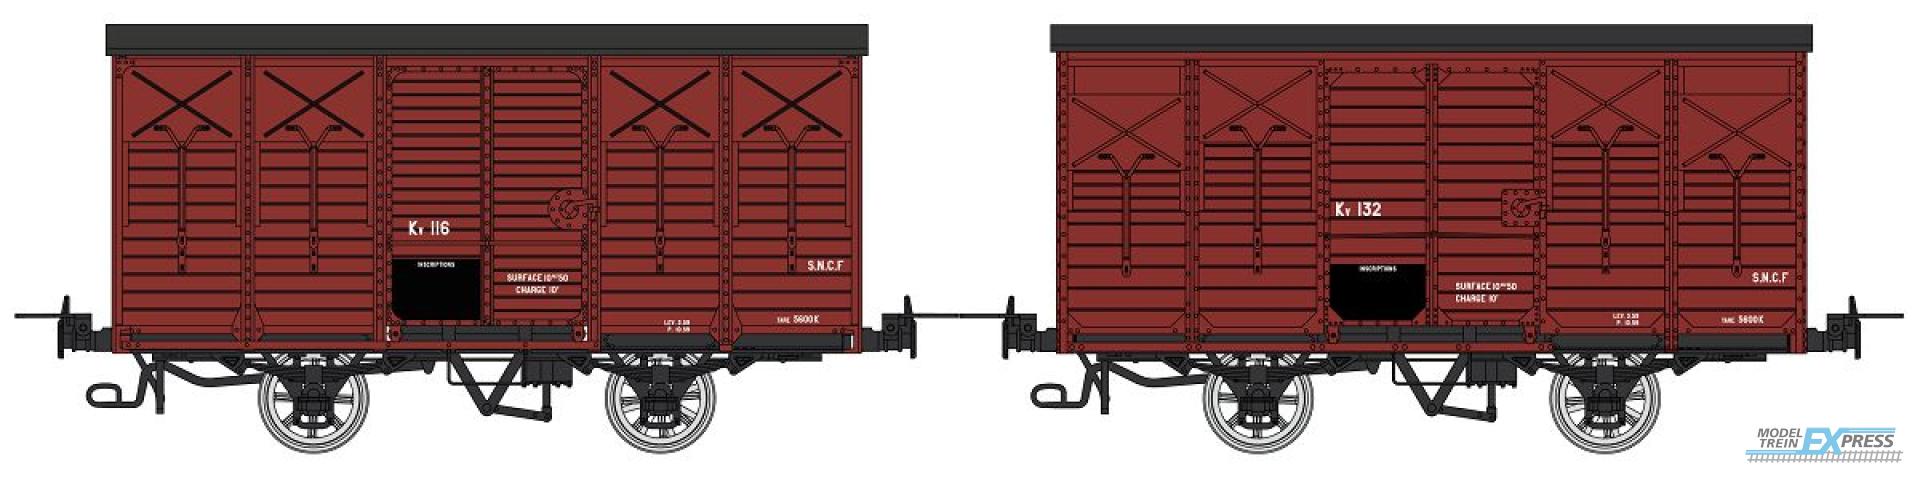 REE models VM-029 Set of 2 Covered Wagon, Roof 2 slopes, UIC Red, SNCF Kv 116 & Kv 132